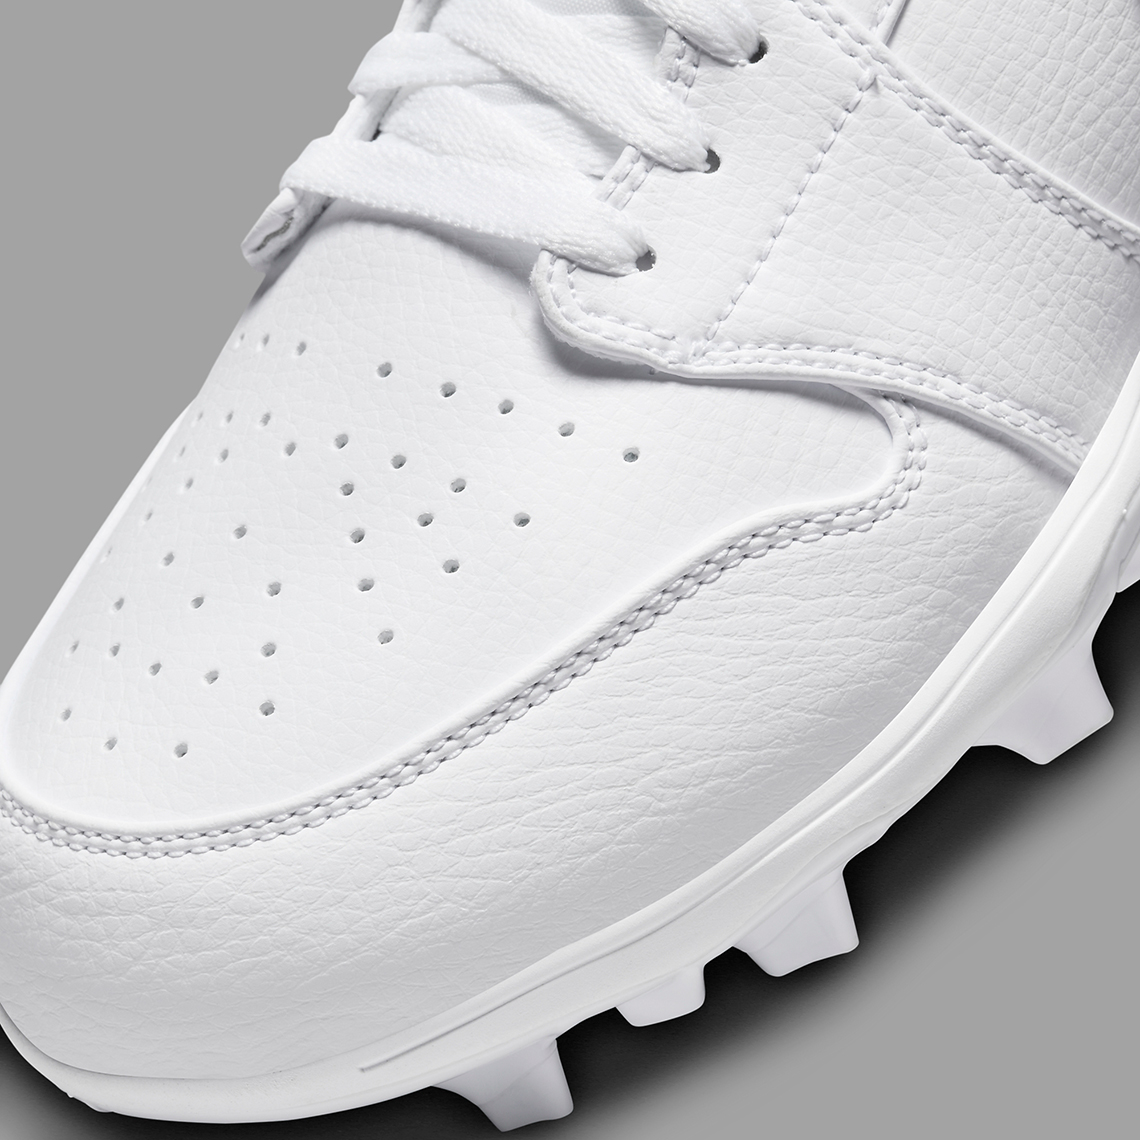 Sneaker Shirts Jordan 6 Carmine White Carmine Carnage Cleat Neutral Grey Fj6805 101 5